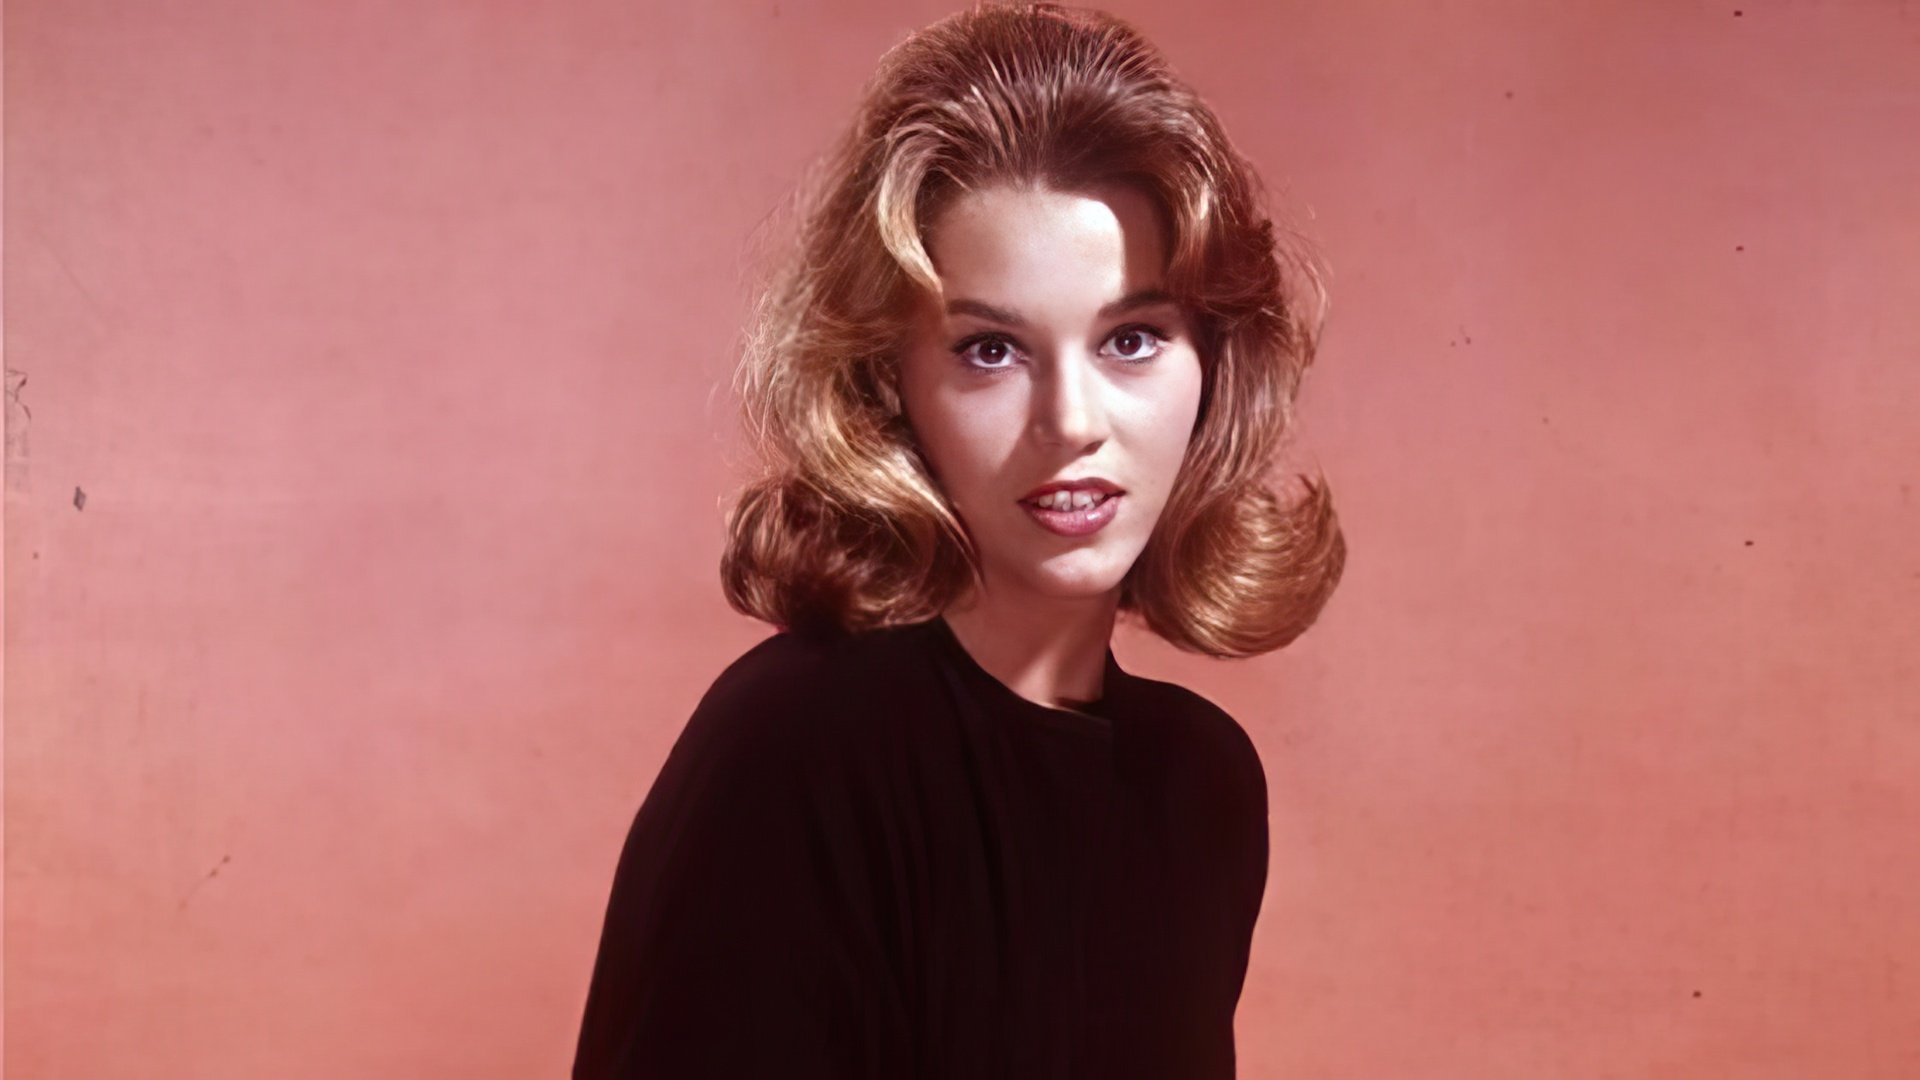 Jane Fonda in her youth